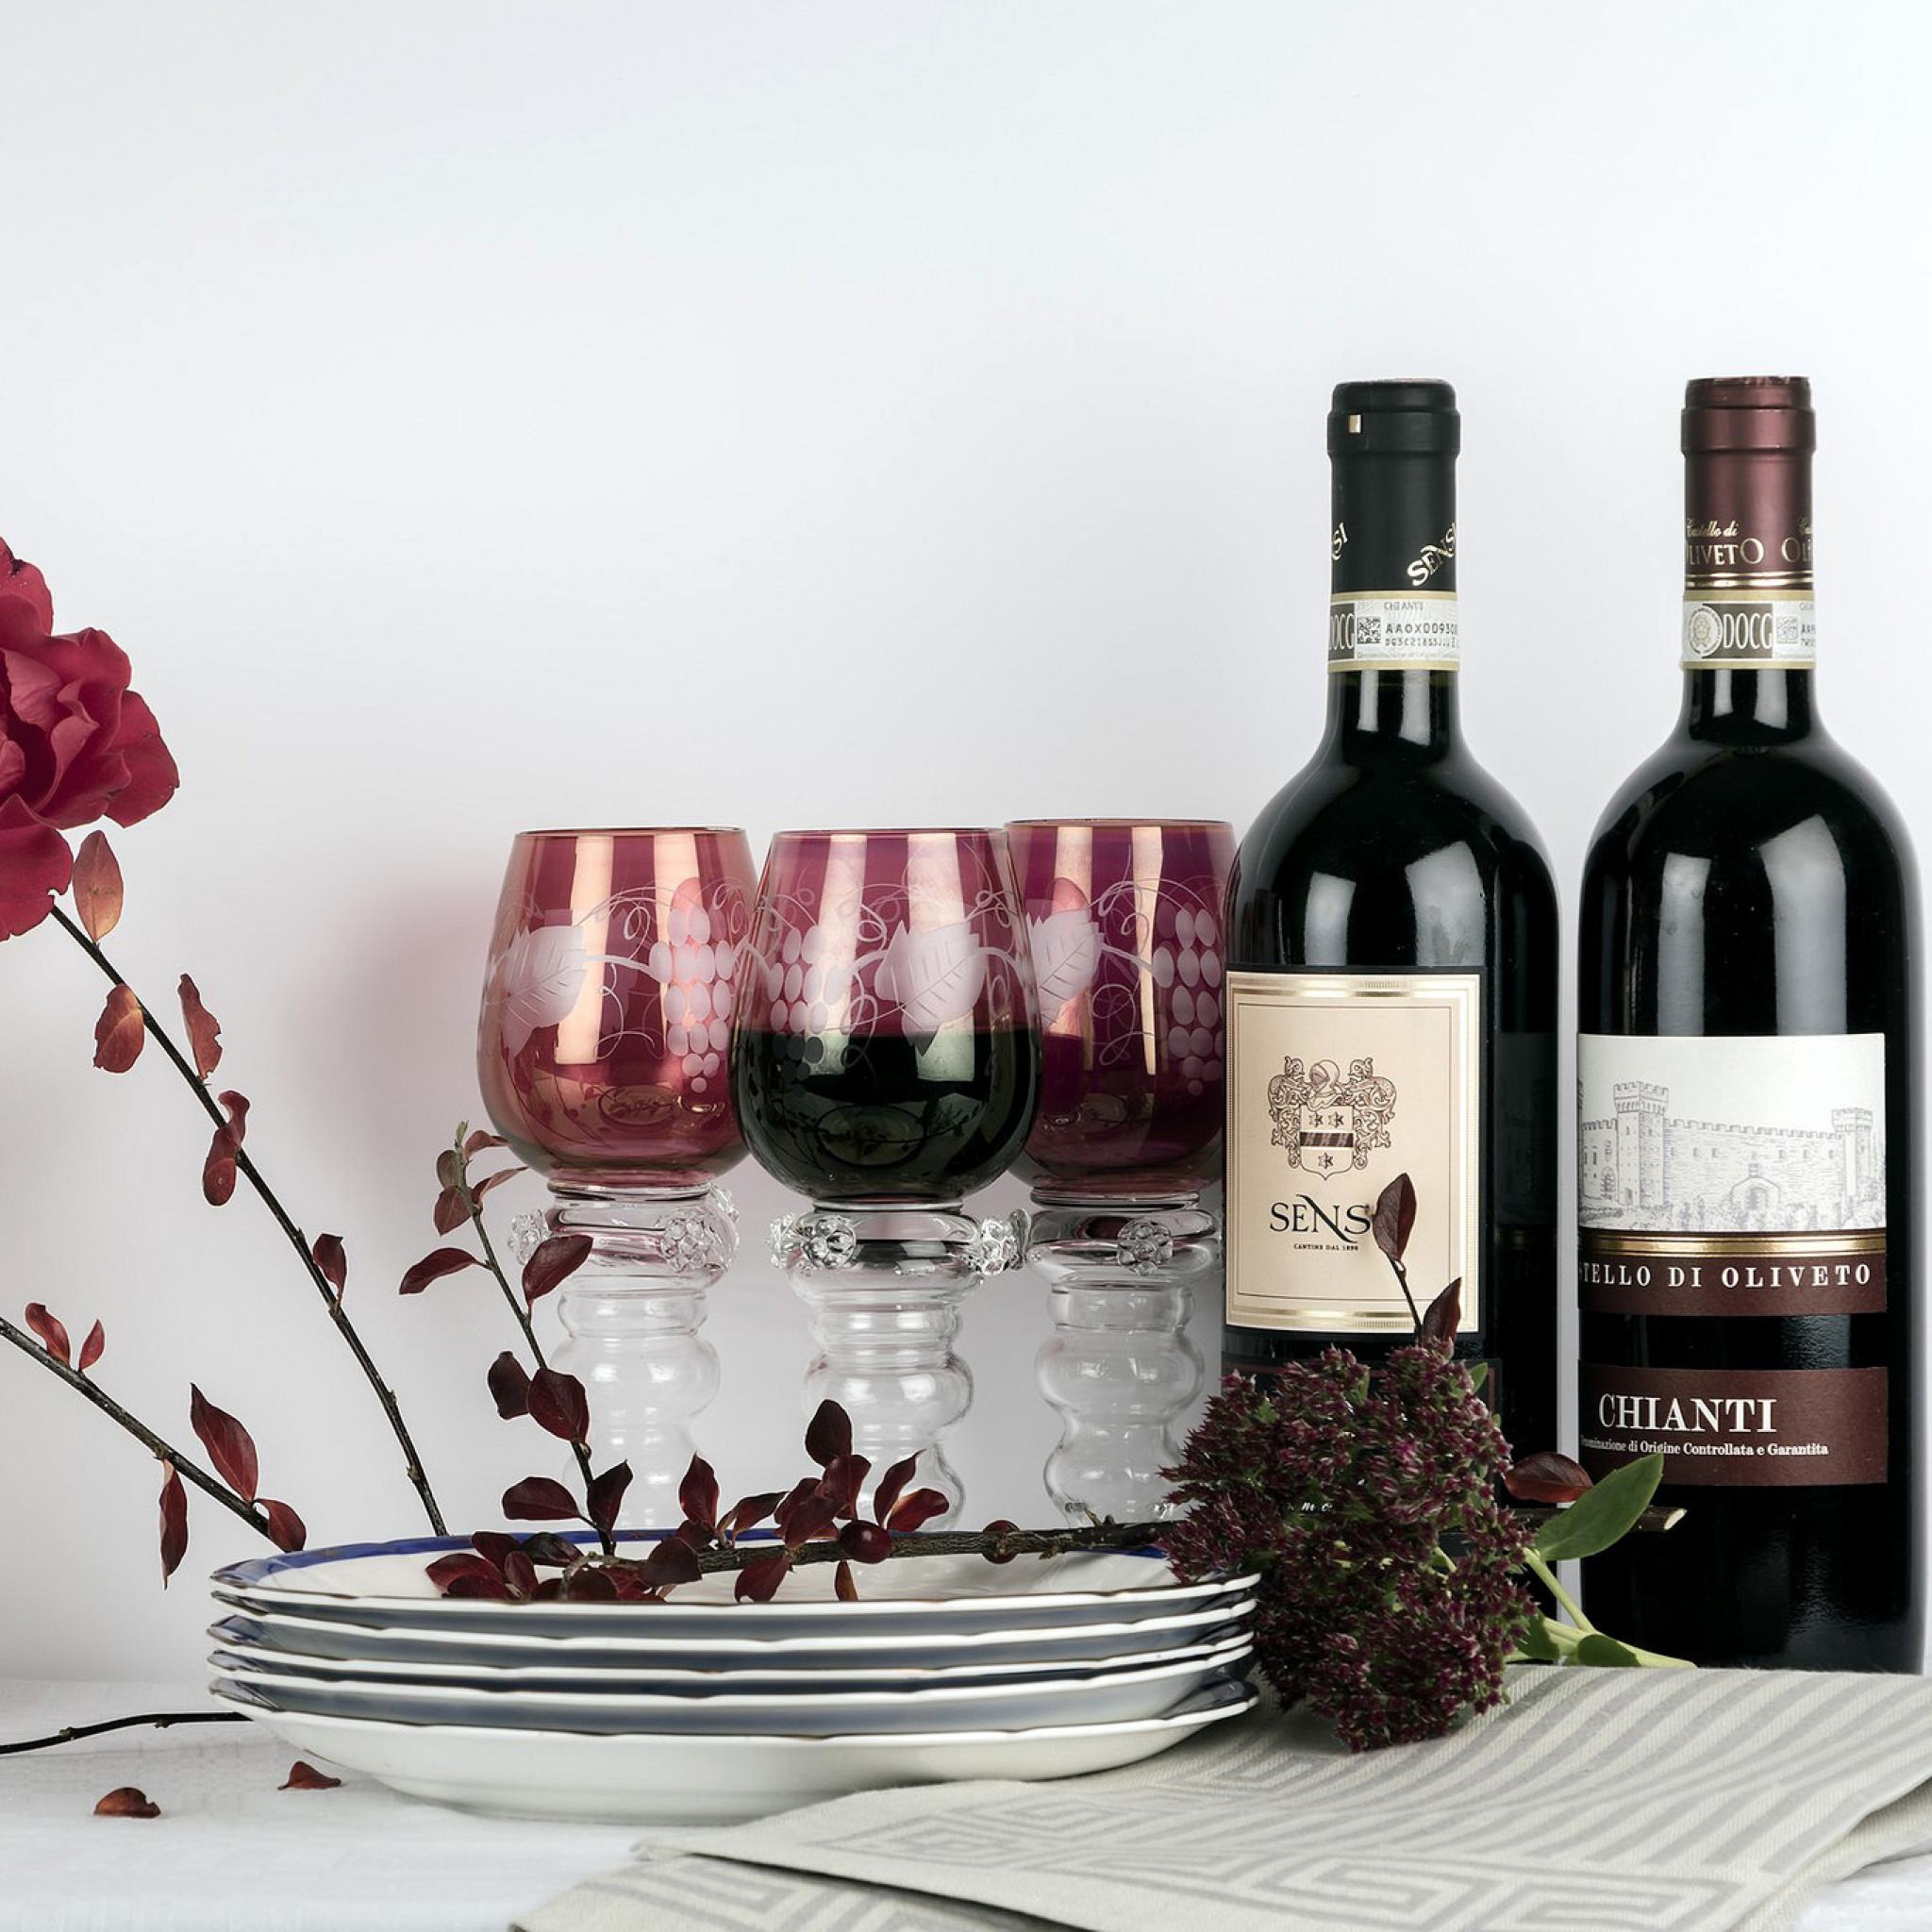 Das Chianti Wine from Tuscany region Wallpaper 2048x2048